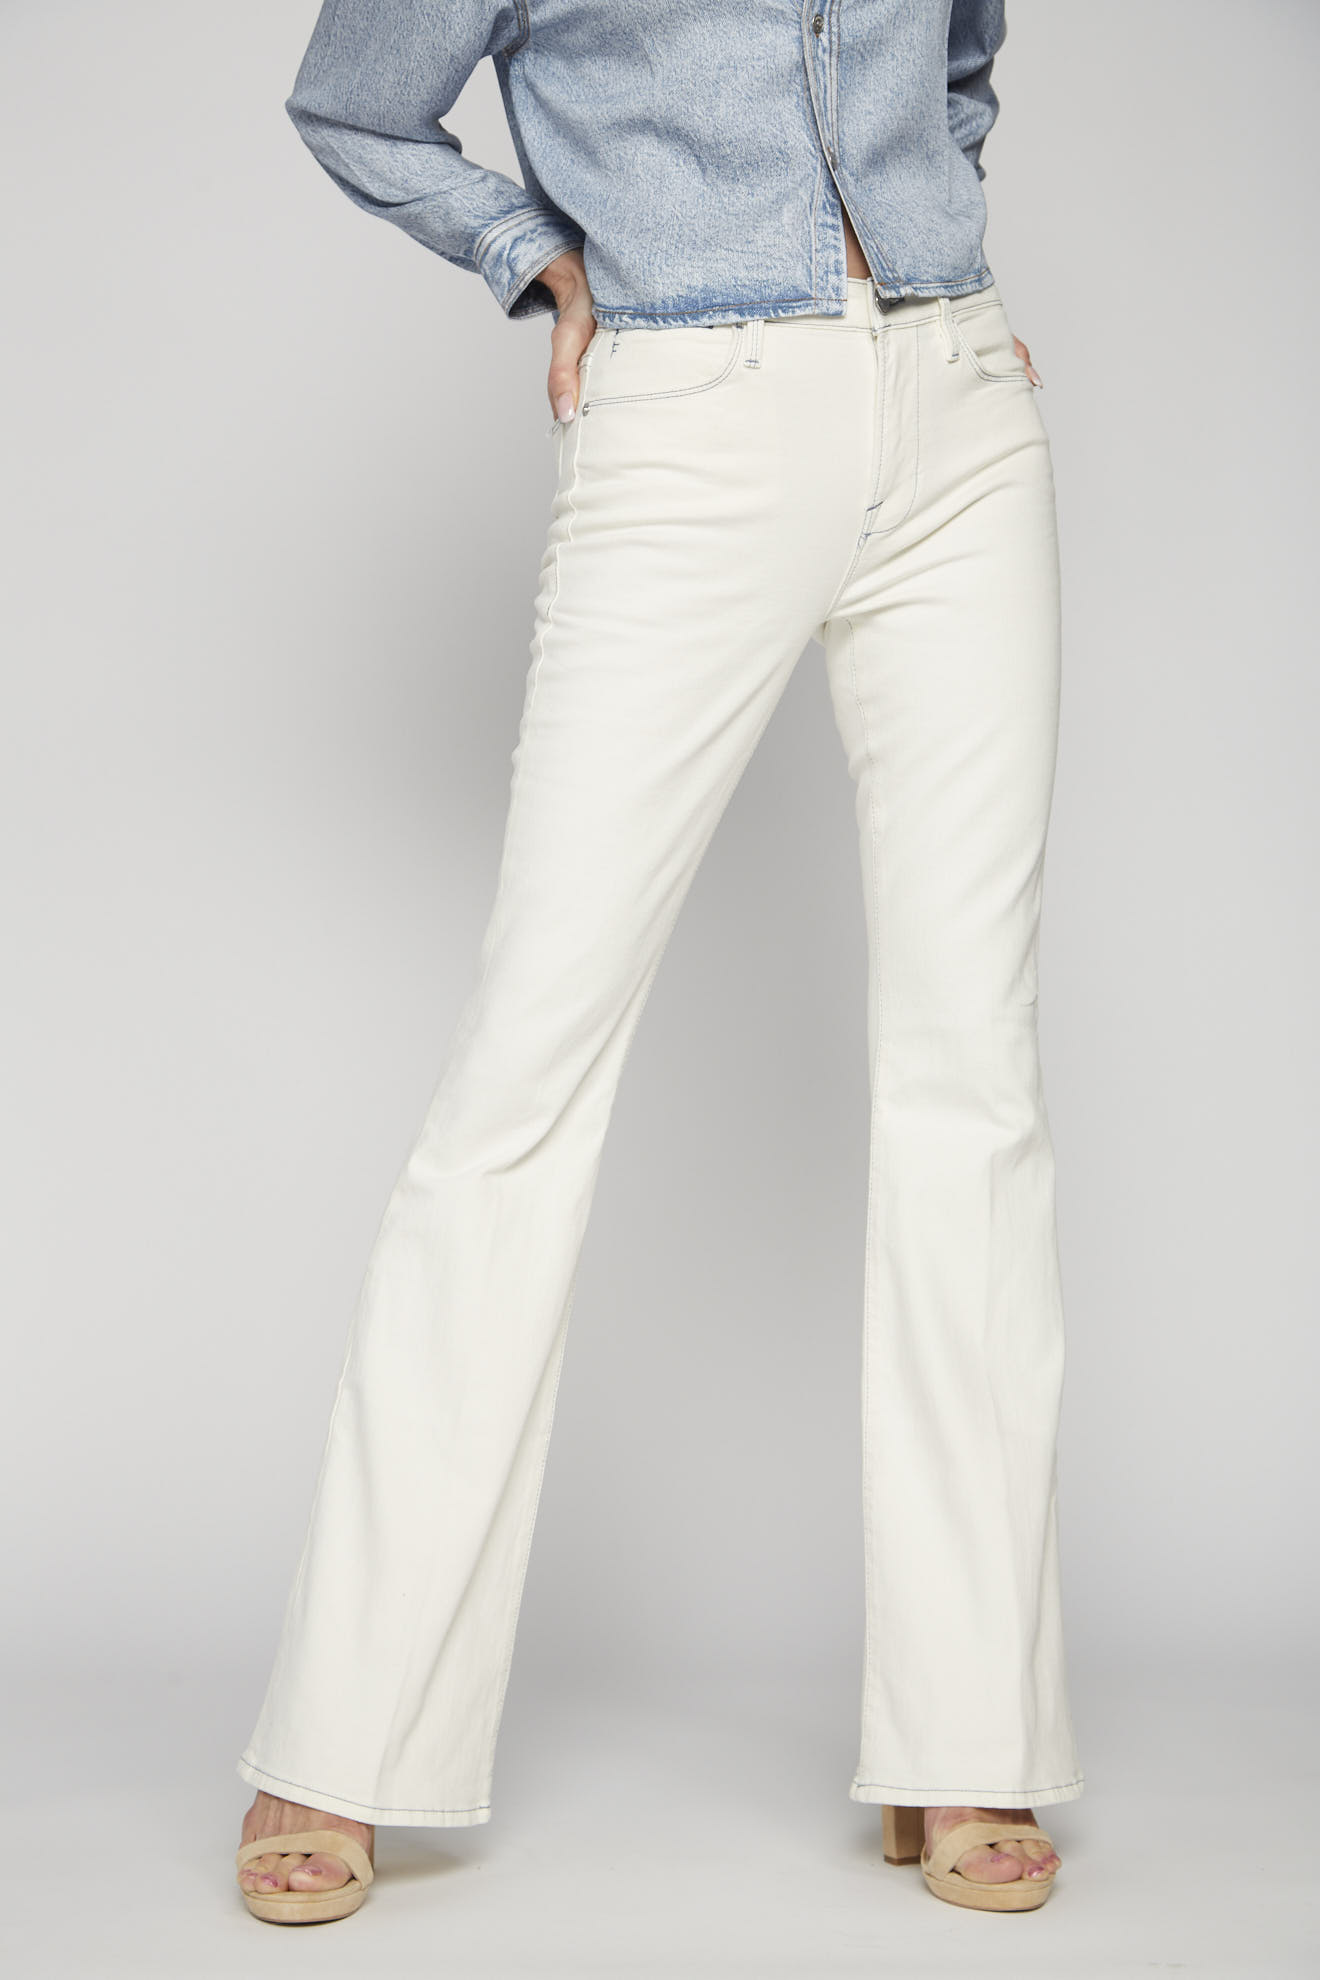 frame jeans white plain mix model front